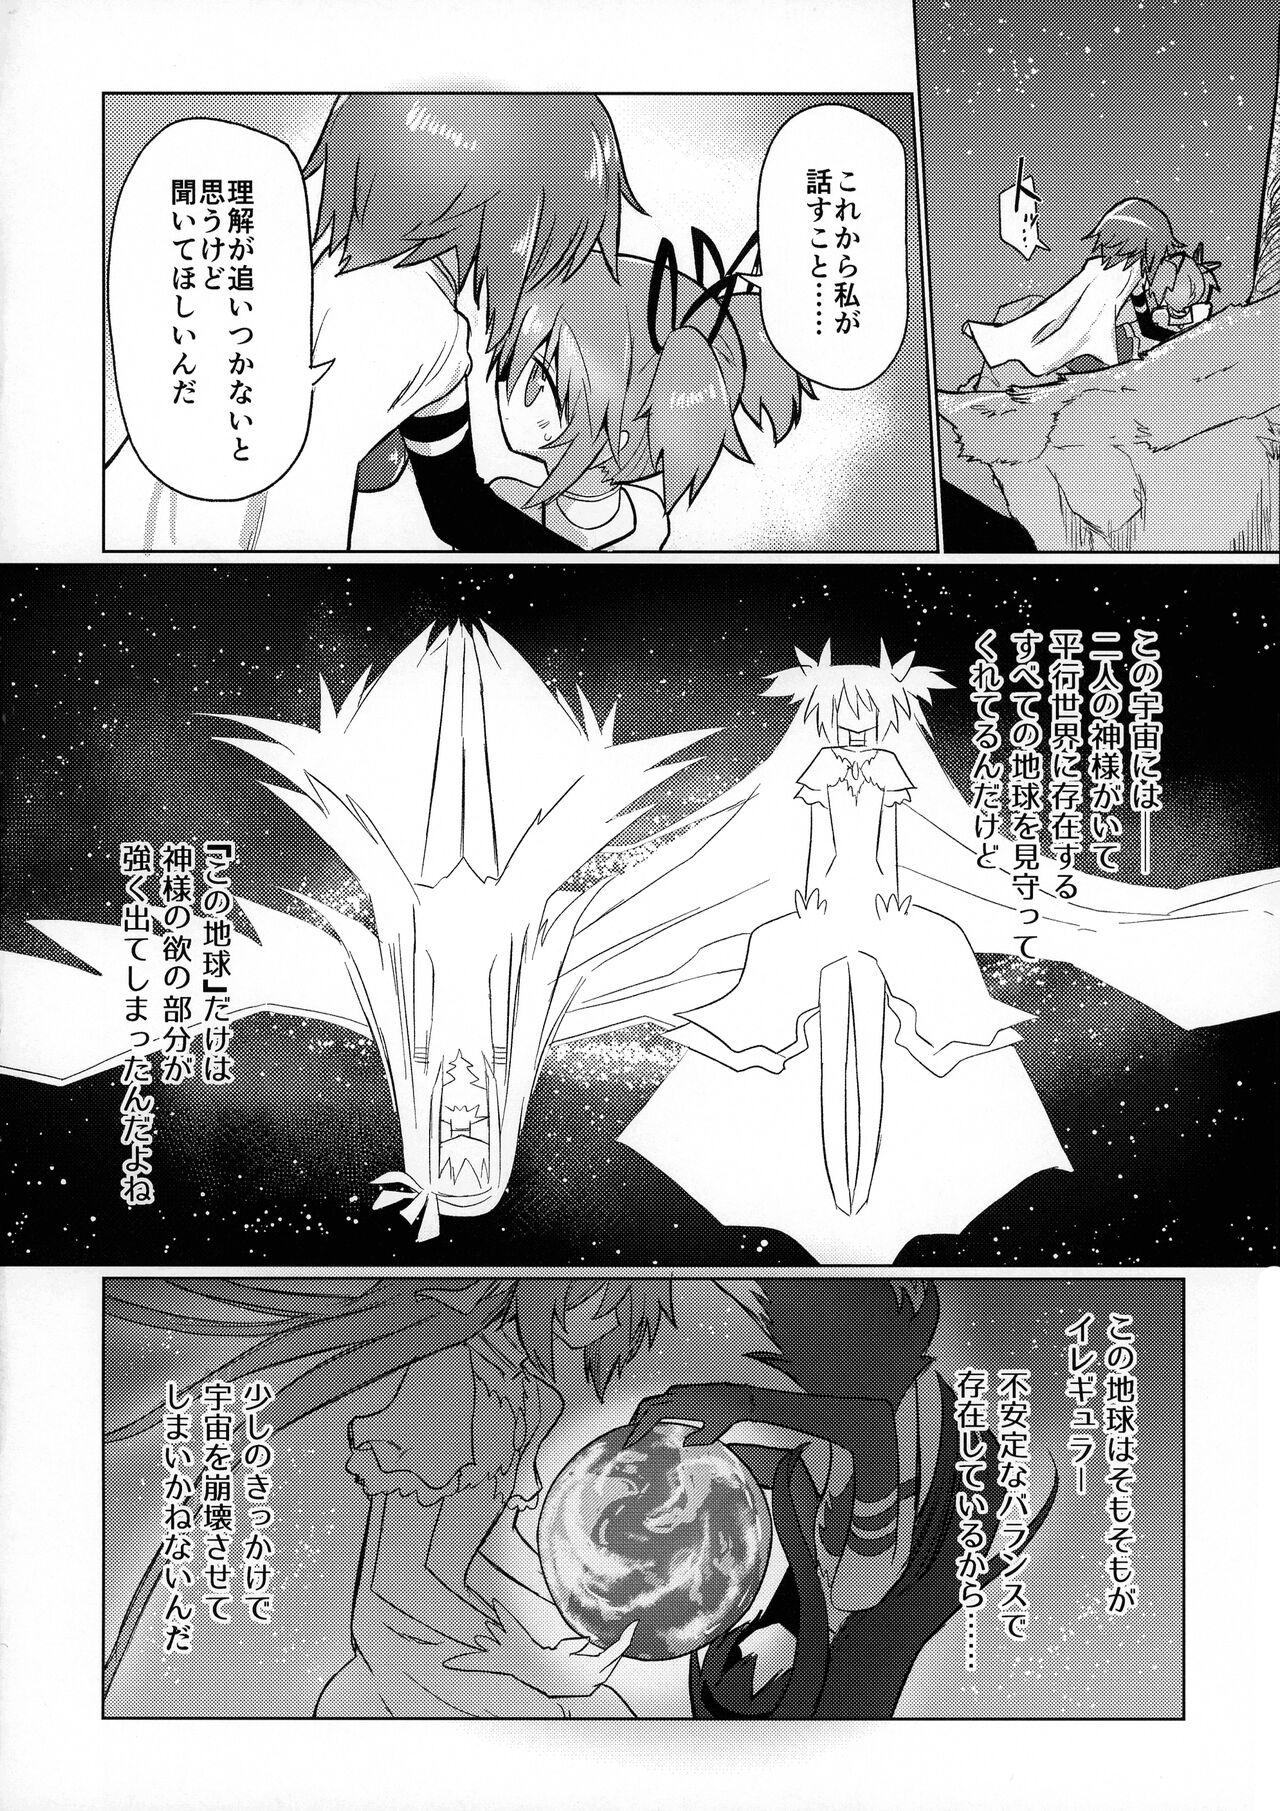 Stepbro Fellatiosaurus VS Mahou Shoujo Kouhen - Puella magi madoka magica Stretching - Page 6